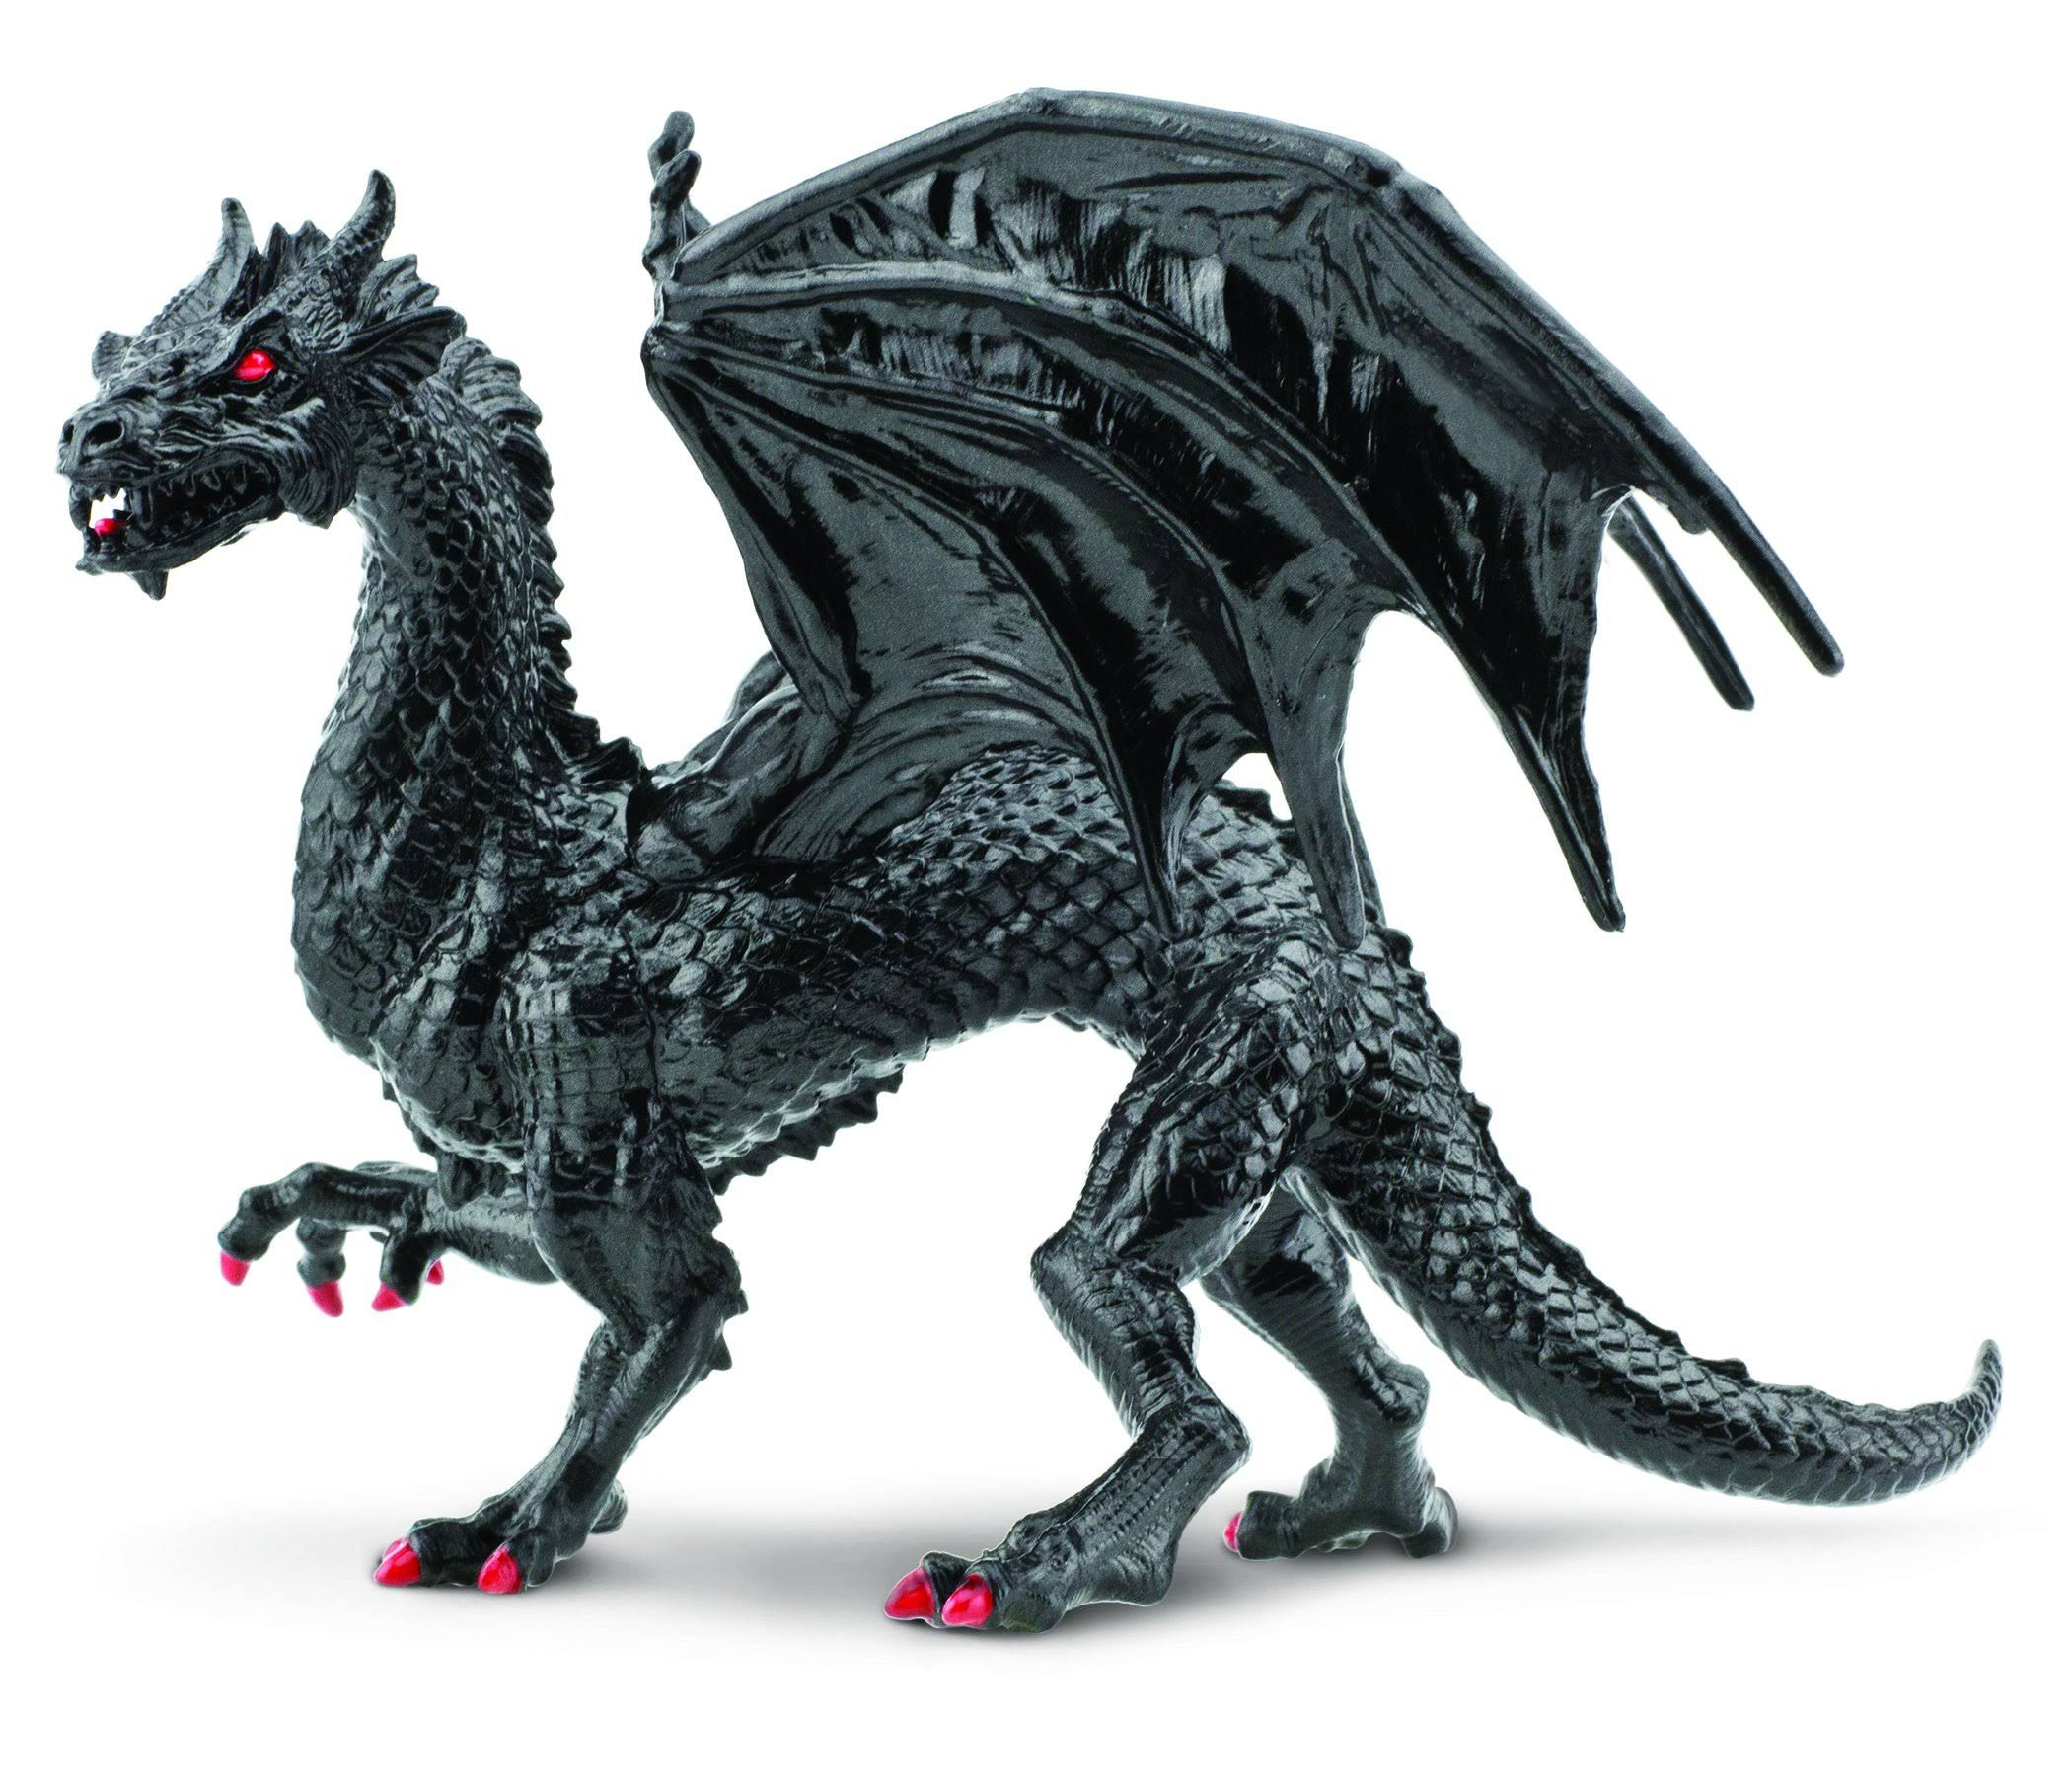 Safari Ltd Twilight Dragon Fantasy Dragons Toy Figure - Black